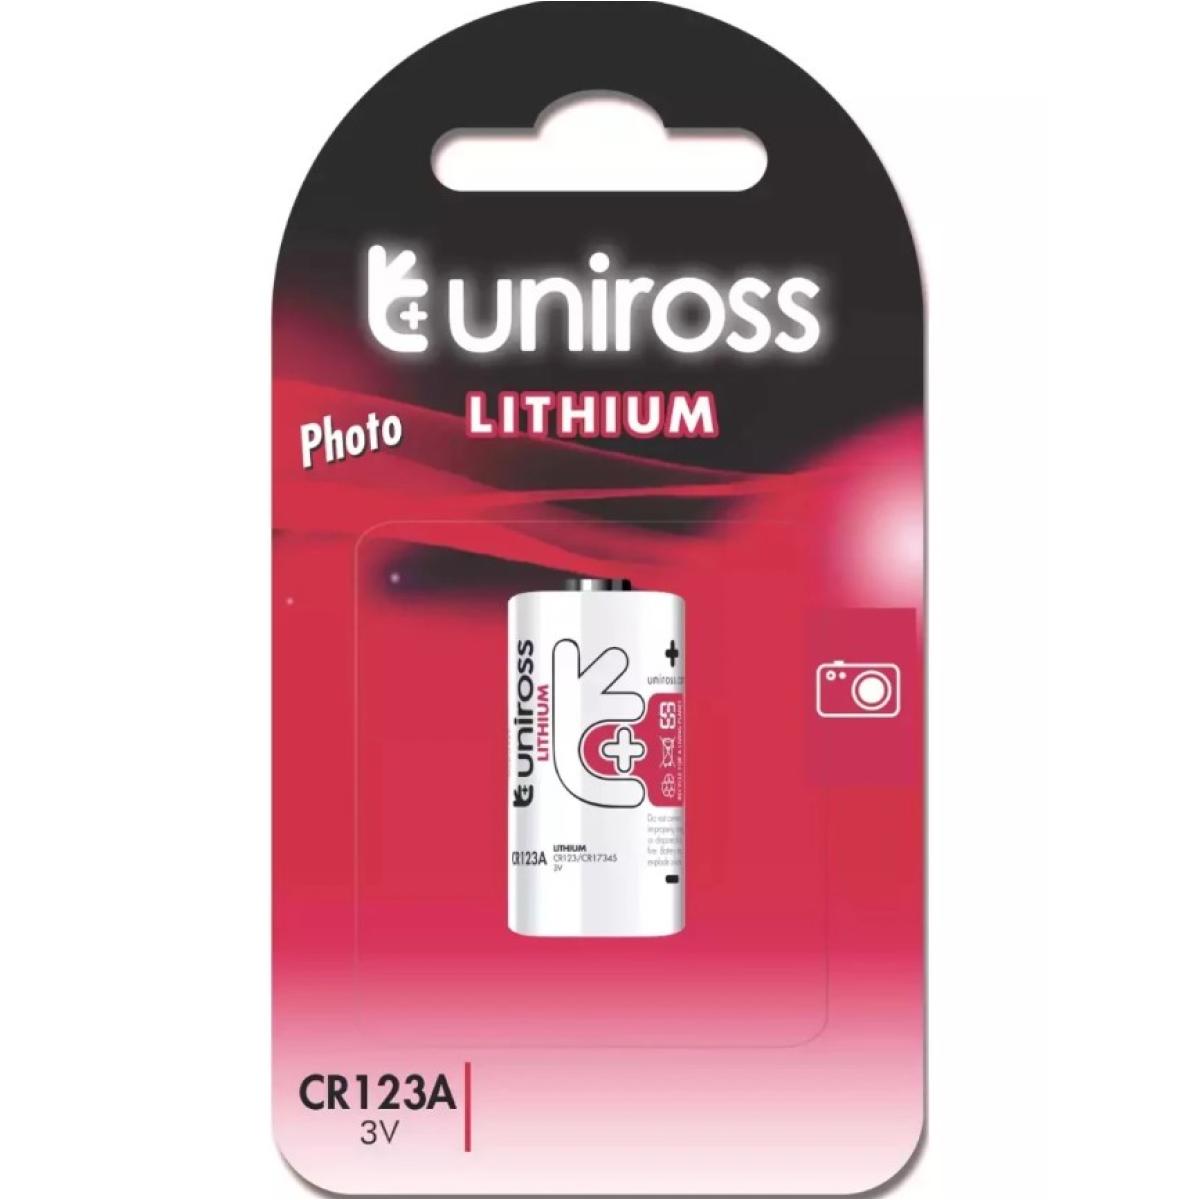 Uniross 3V Industrial Lithium Battery